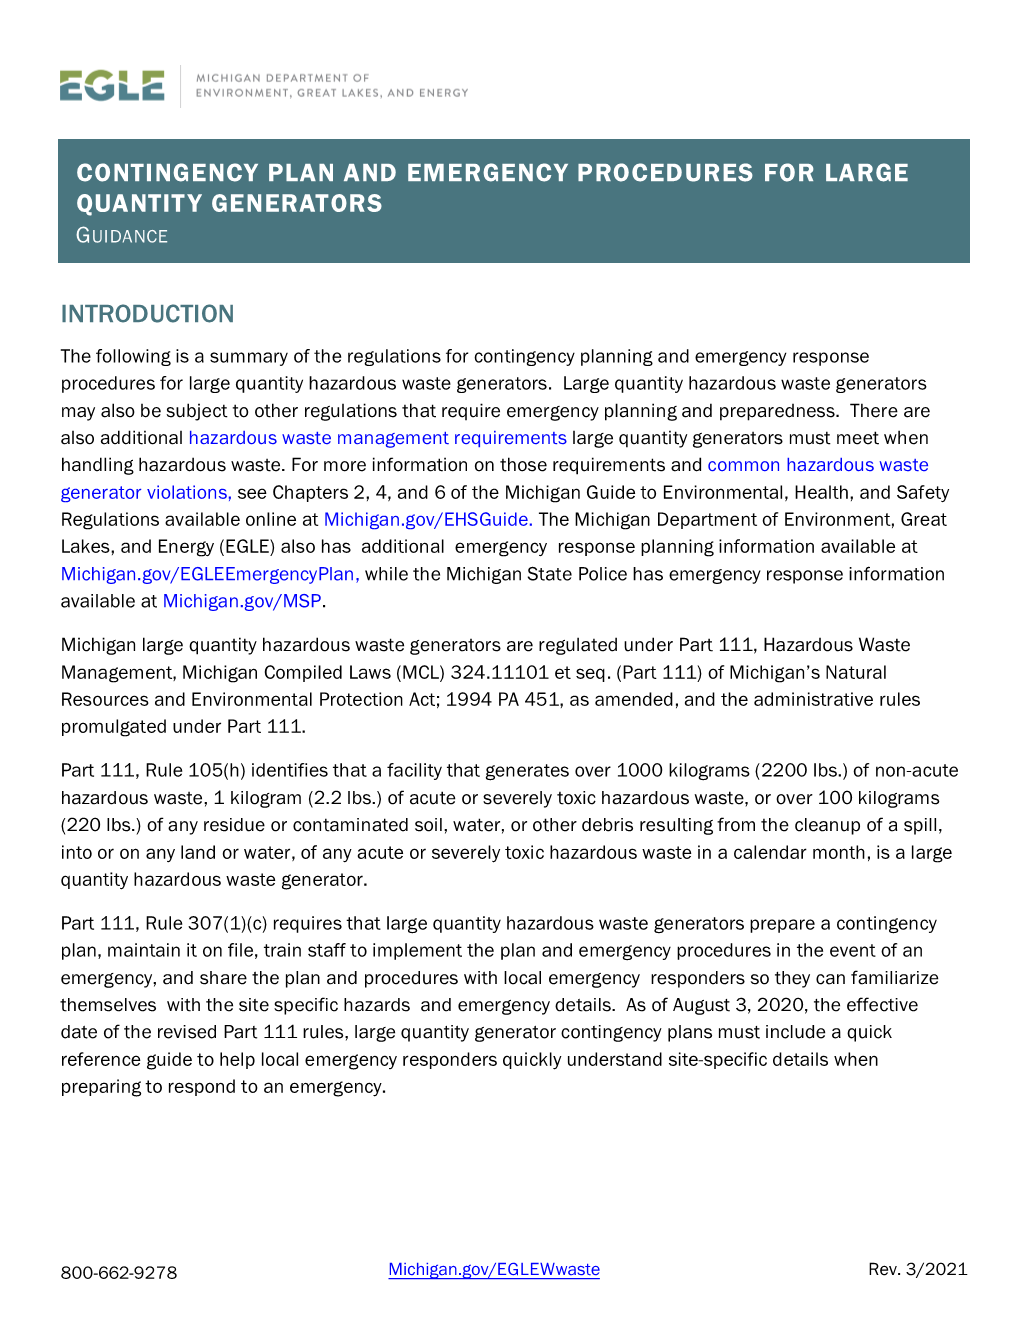 Hazardous Waste Contingency Plan and Emergency Procedures for Large Quantity Generators